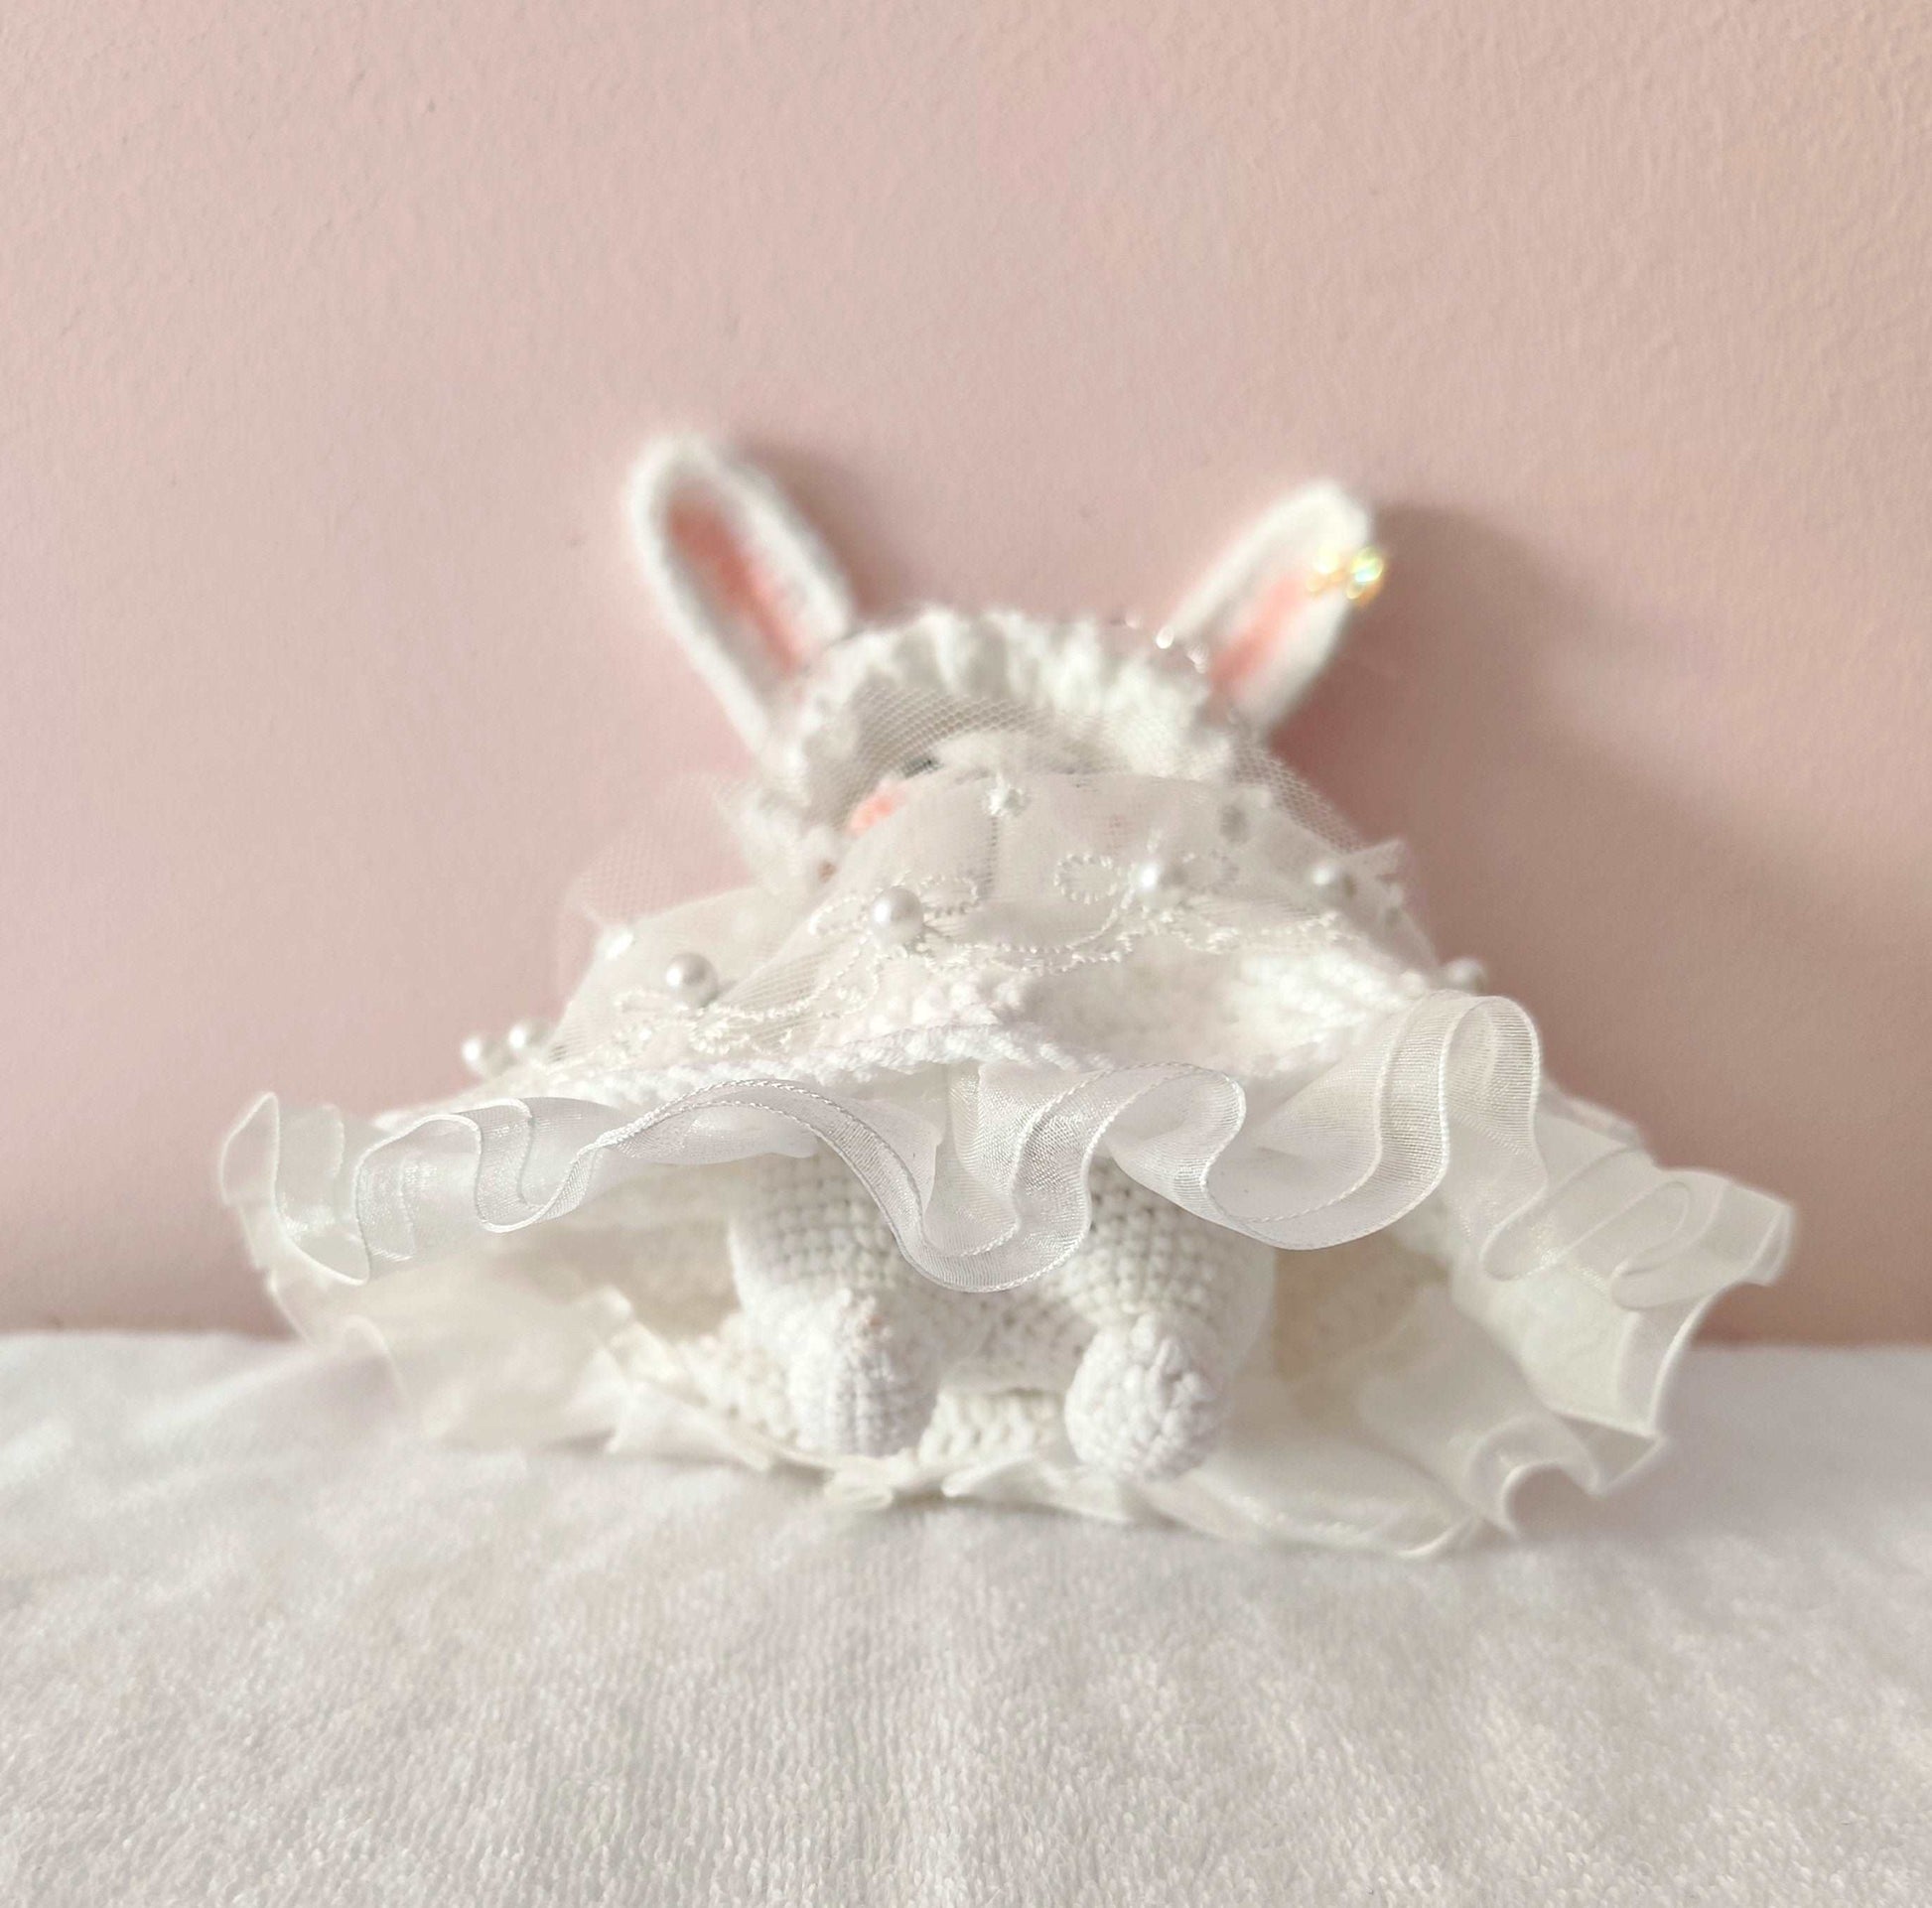 Delightful Handmade Rabbit Figurine for Holiday Decoration